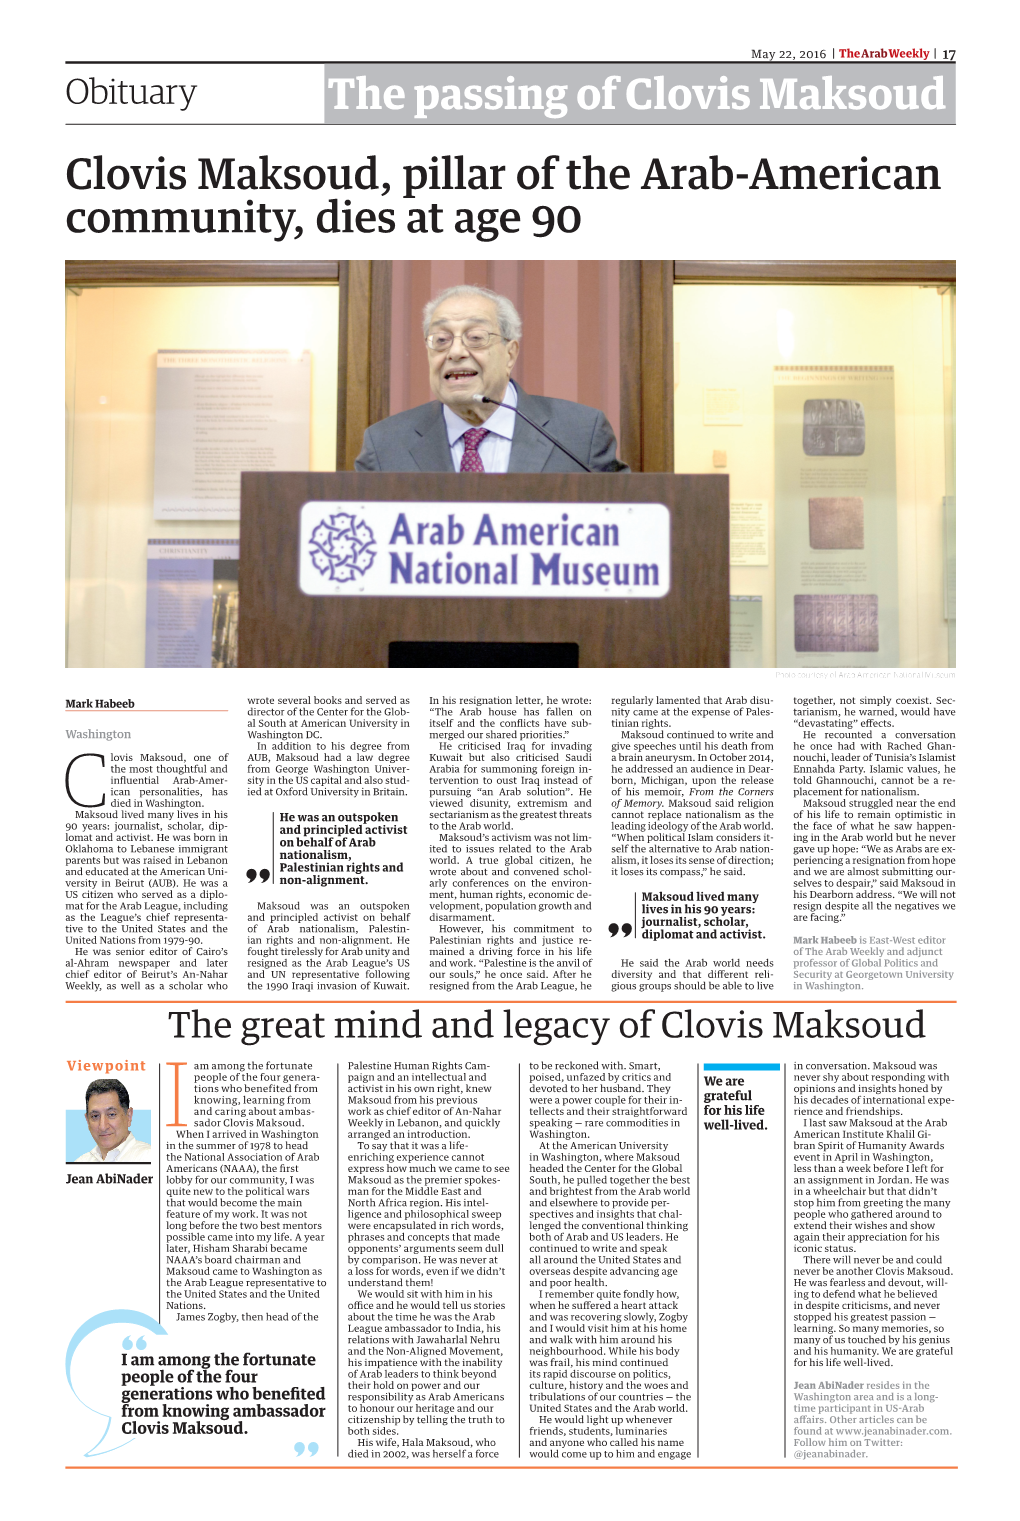 The Passing of Clovis Maksoud Clovis Maksoud, Pillar of the Arab-American Community, Dies at Age 90